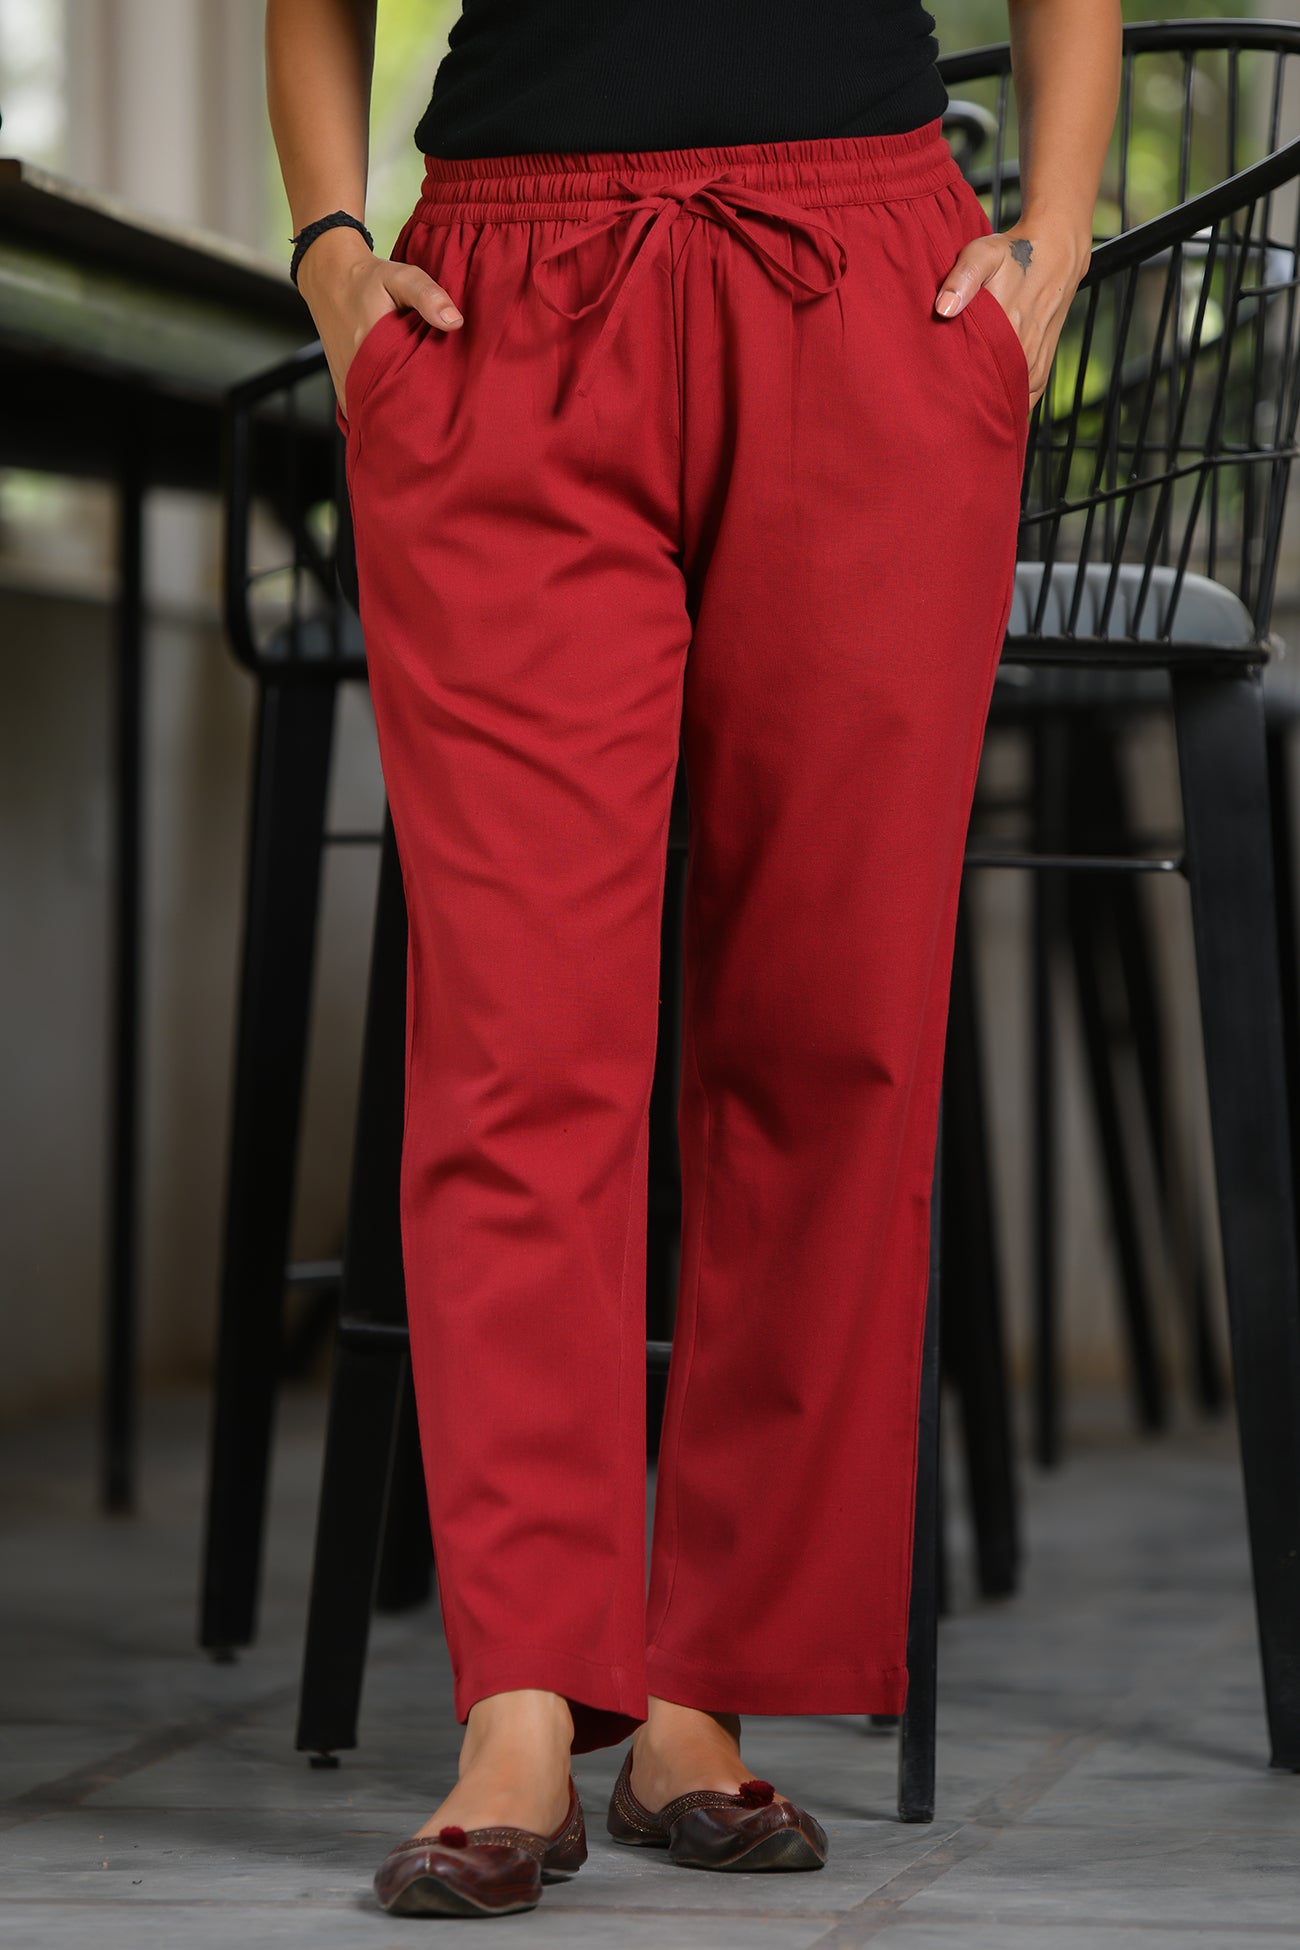 Women Plus Size Red Cotton Trouser, सूती पतलून, कॉटन ट्राउज़र्स - NOZ2TOZ,  New Delhi | ID: 2853214310873